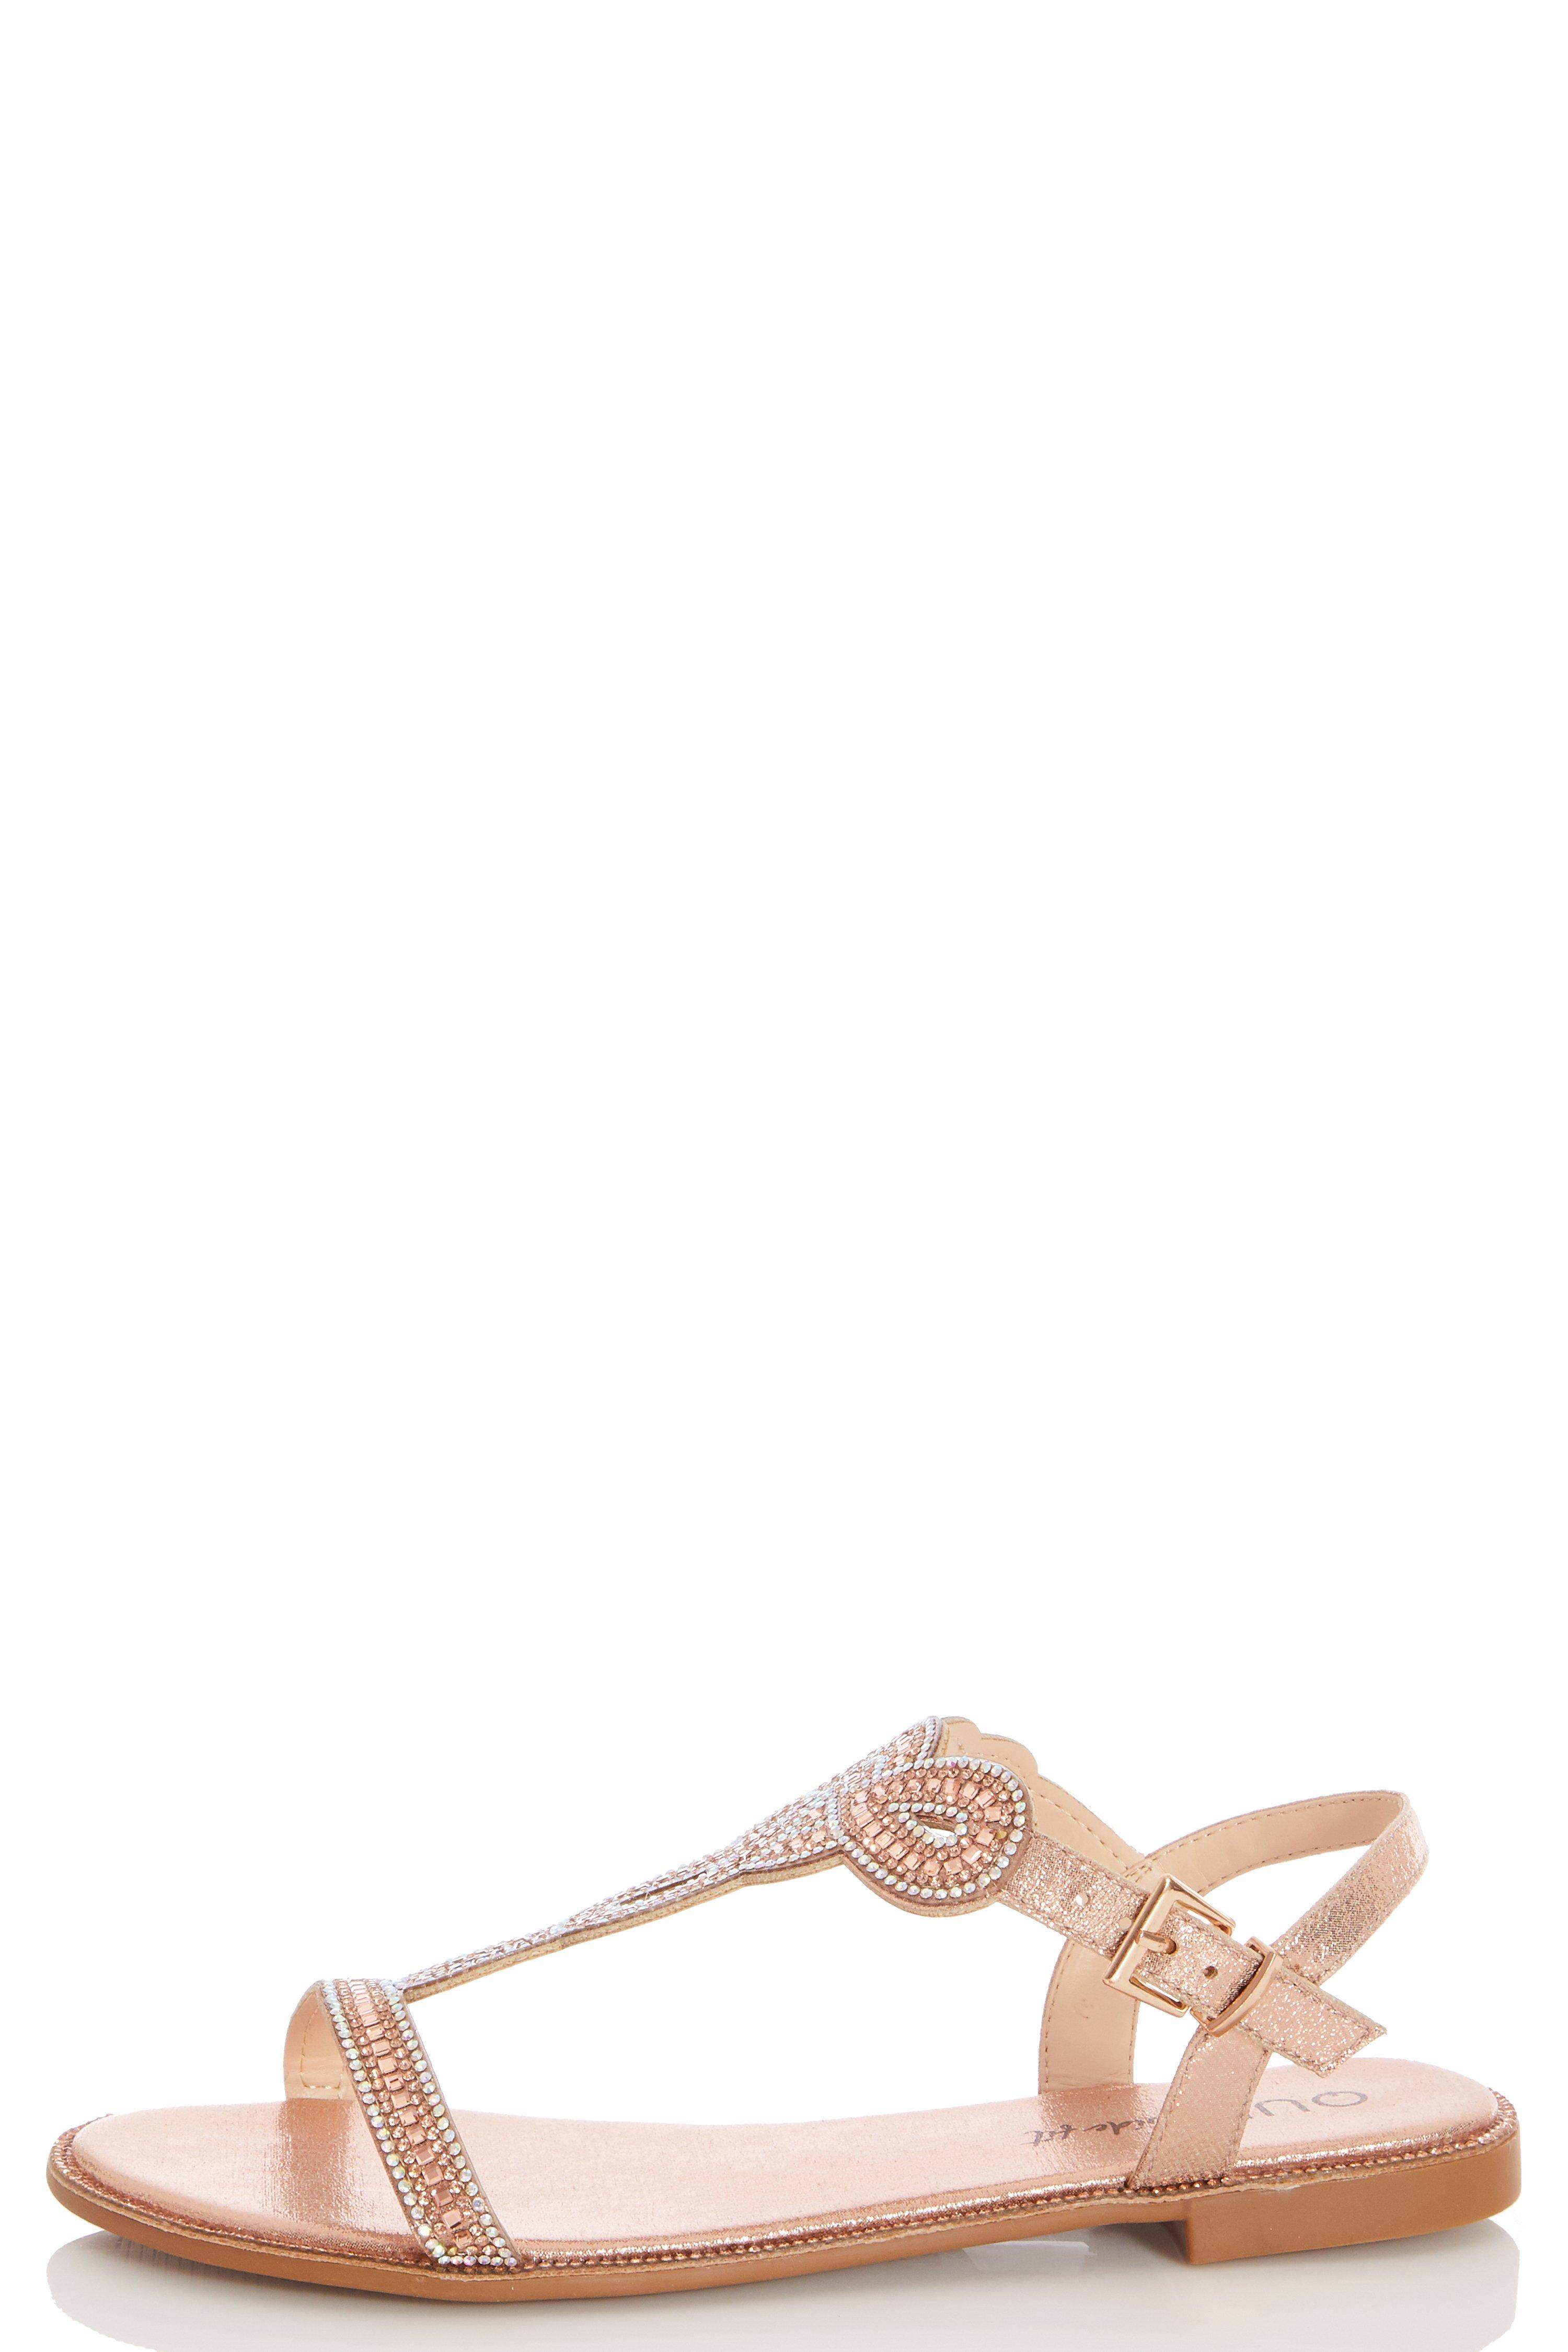 Wide Fit Rose Gold Diamante Sandals - Quiz Clothing